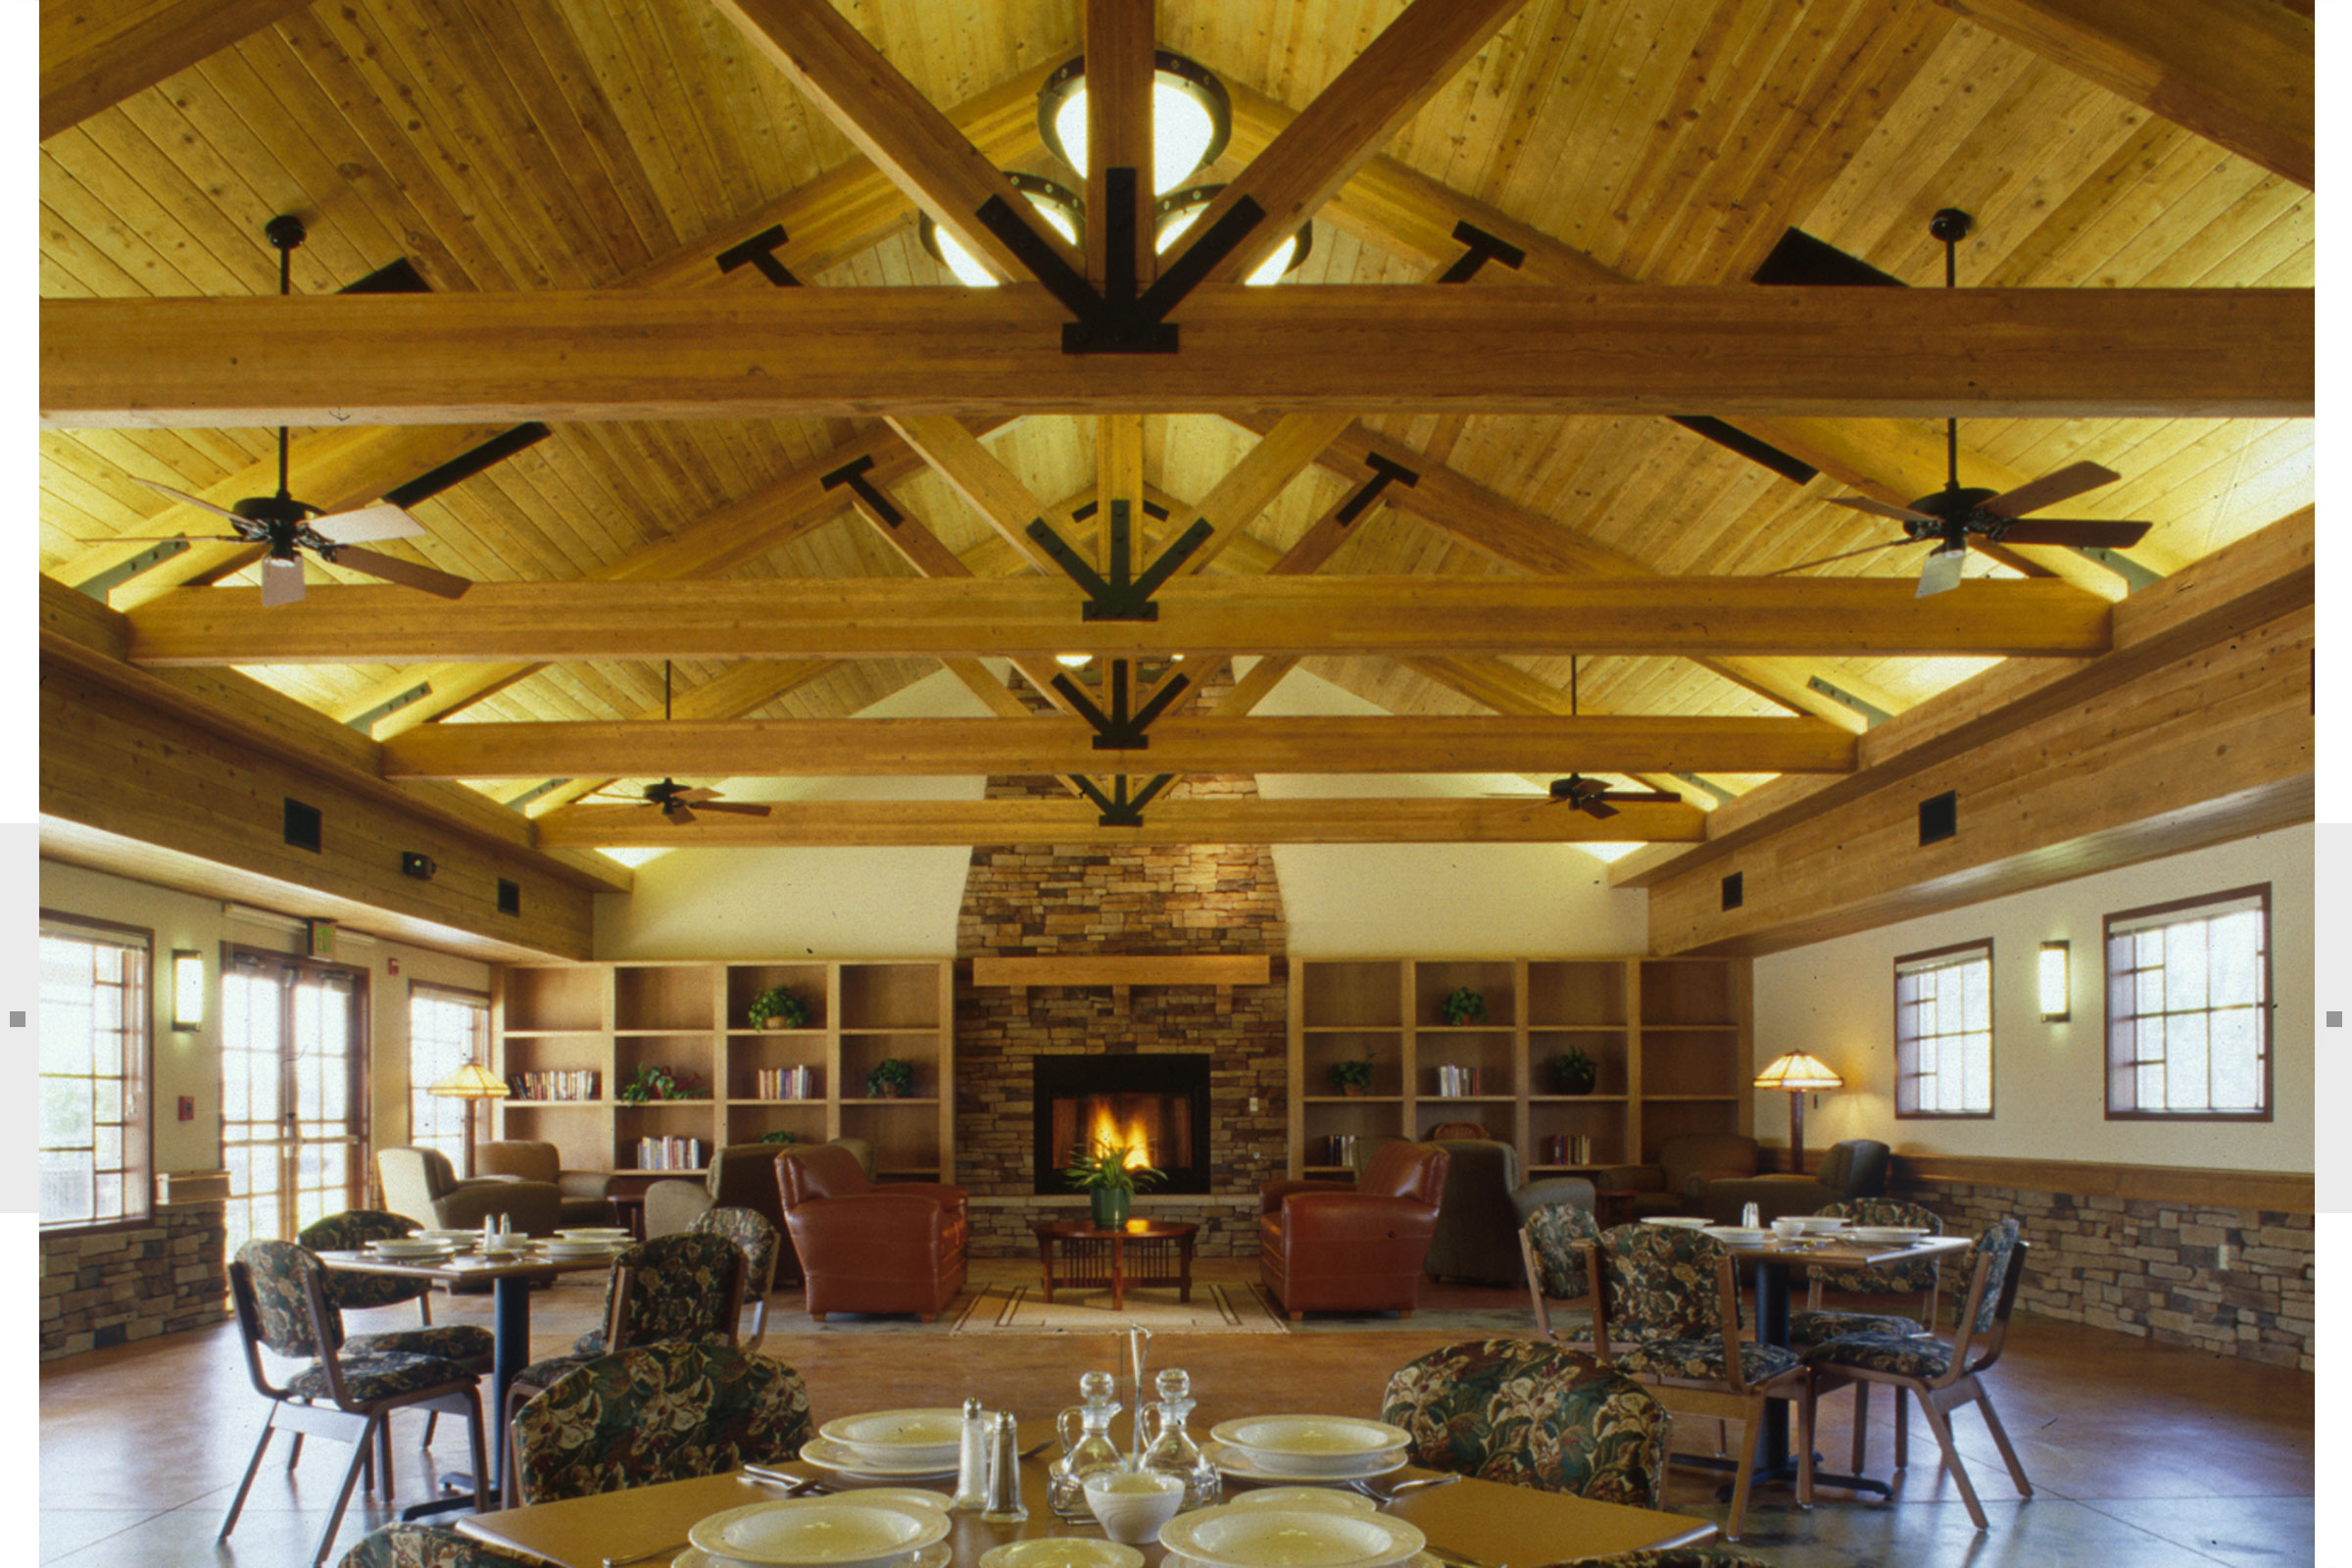 CSU interior dining area featuring beams